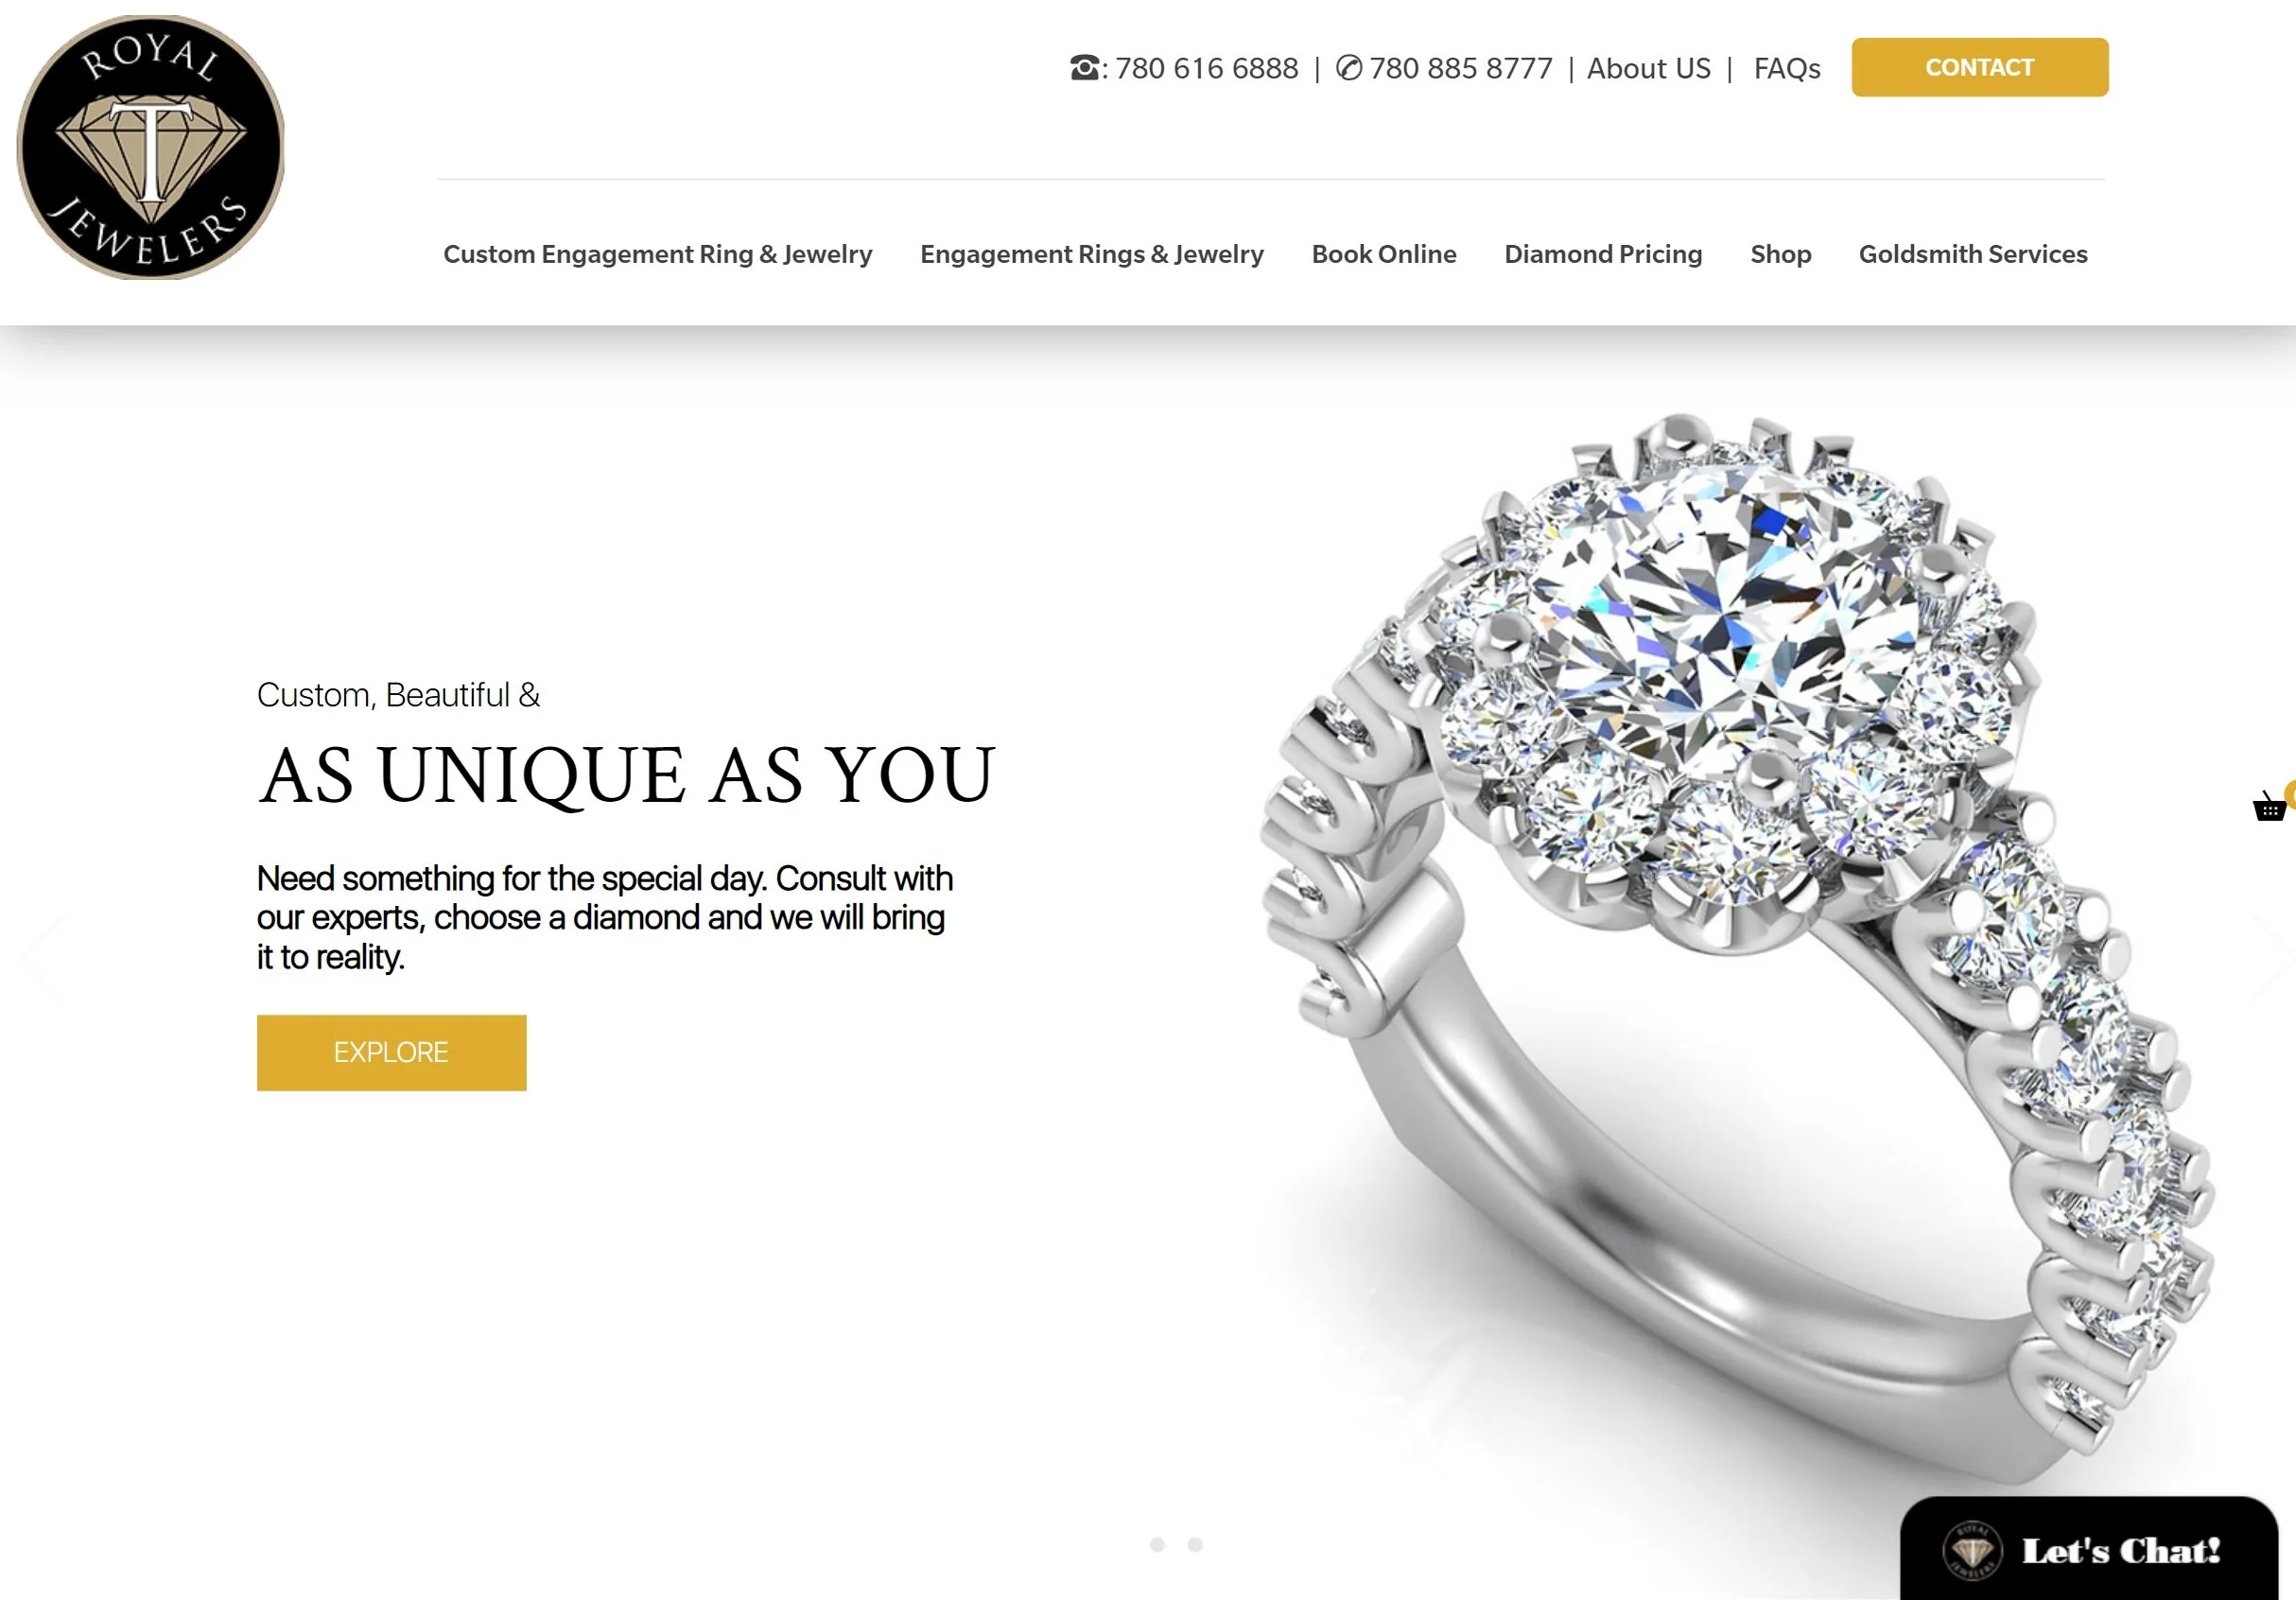 royaltjewelers.com homepage